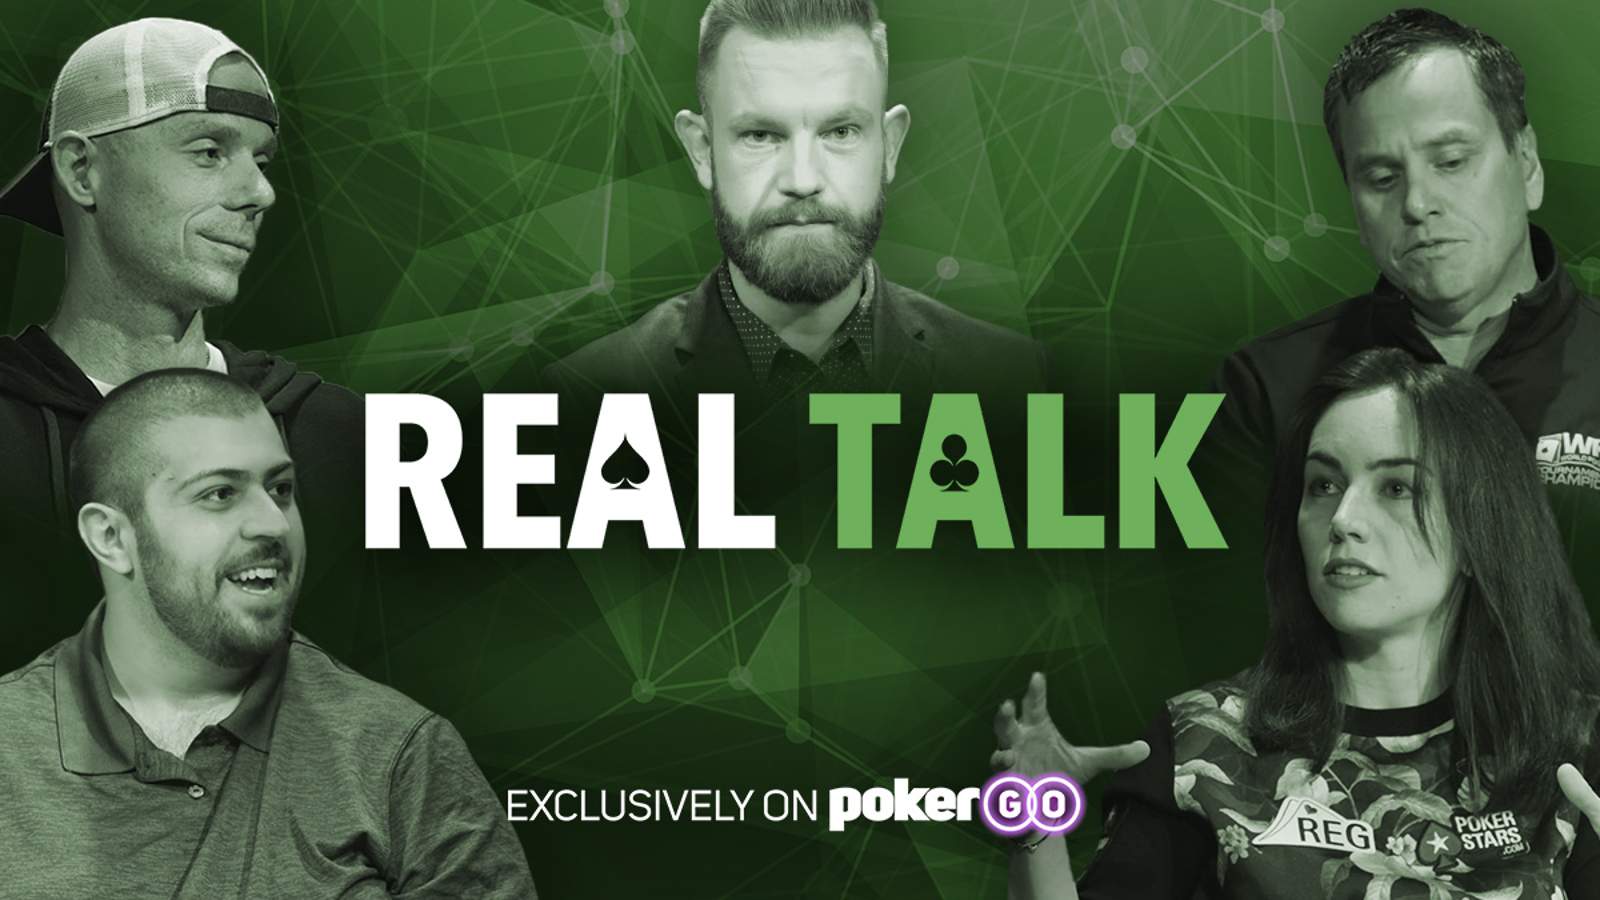 New Original Series "Real Talk" Hits PokerGO